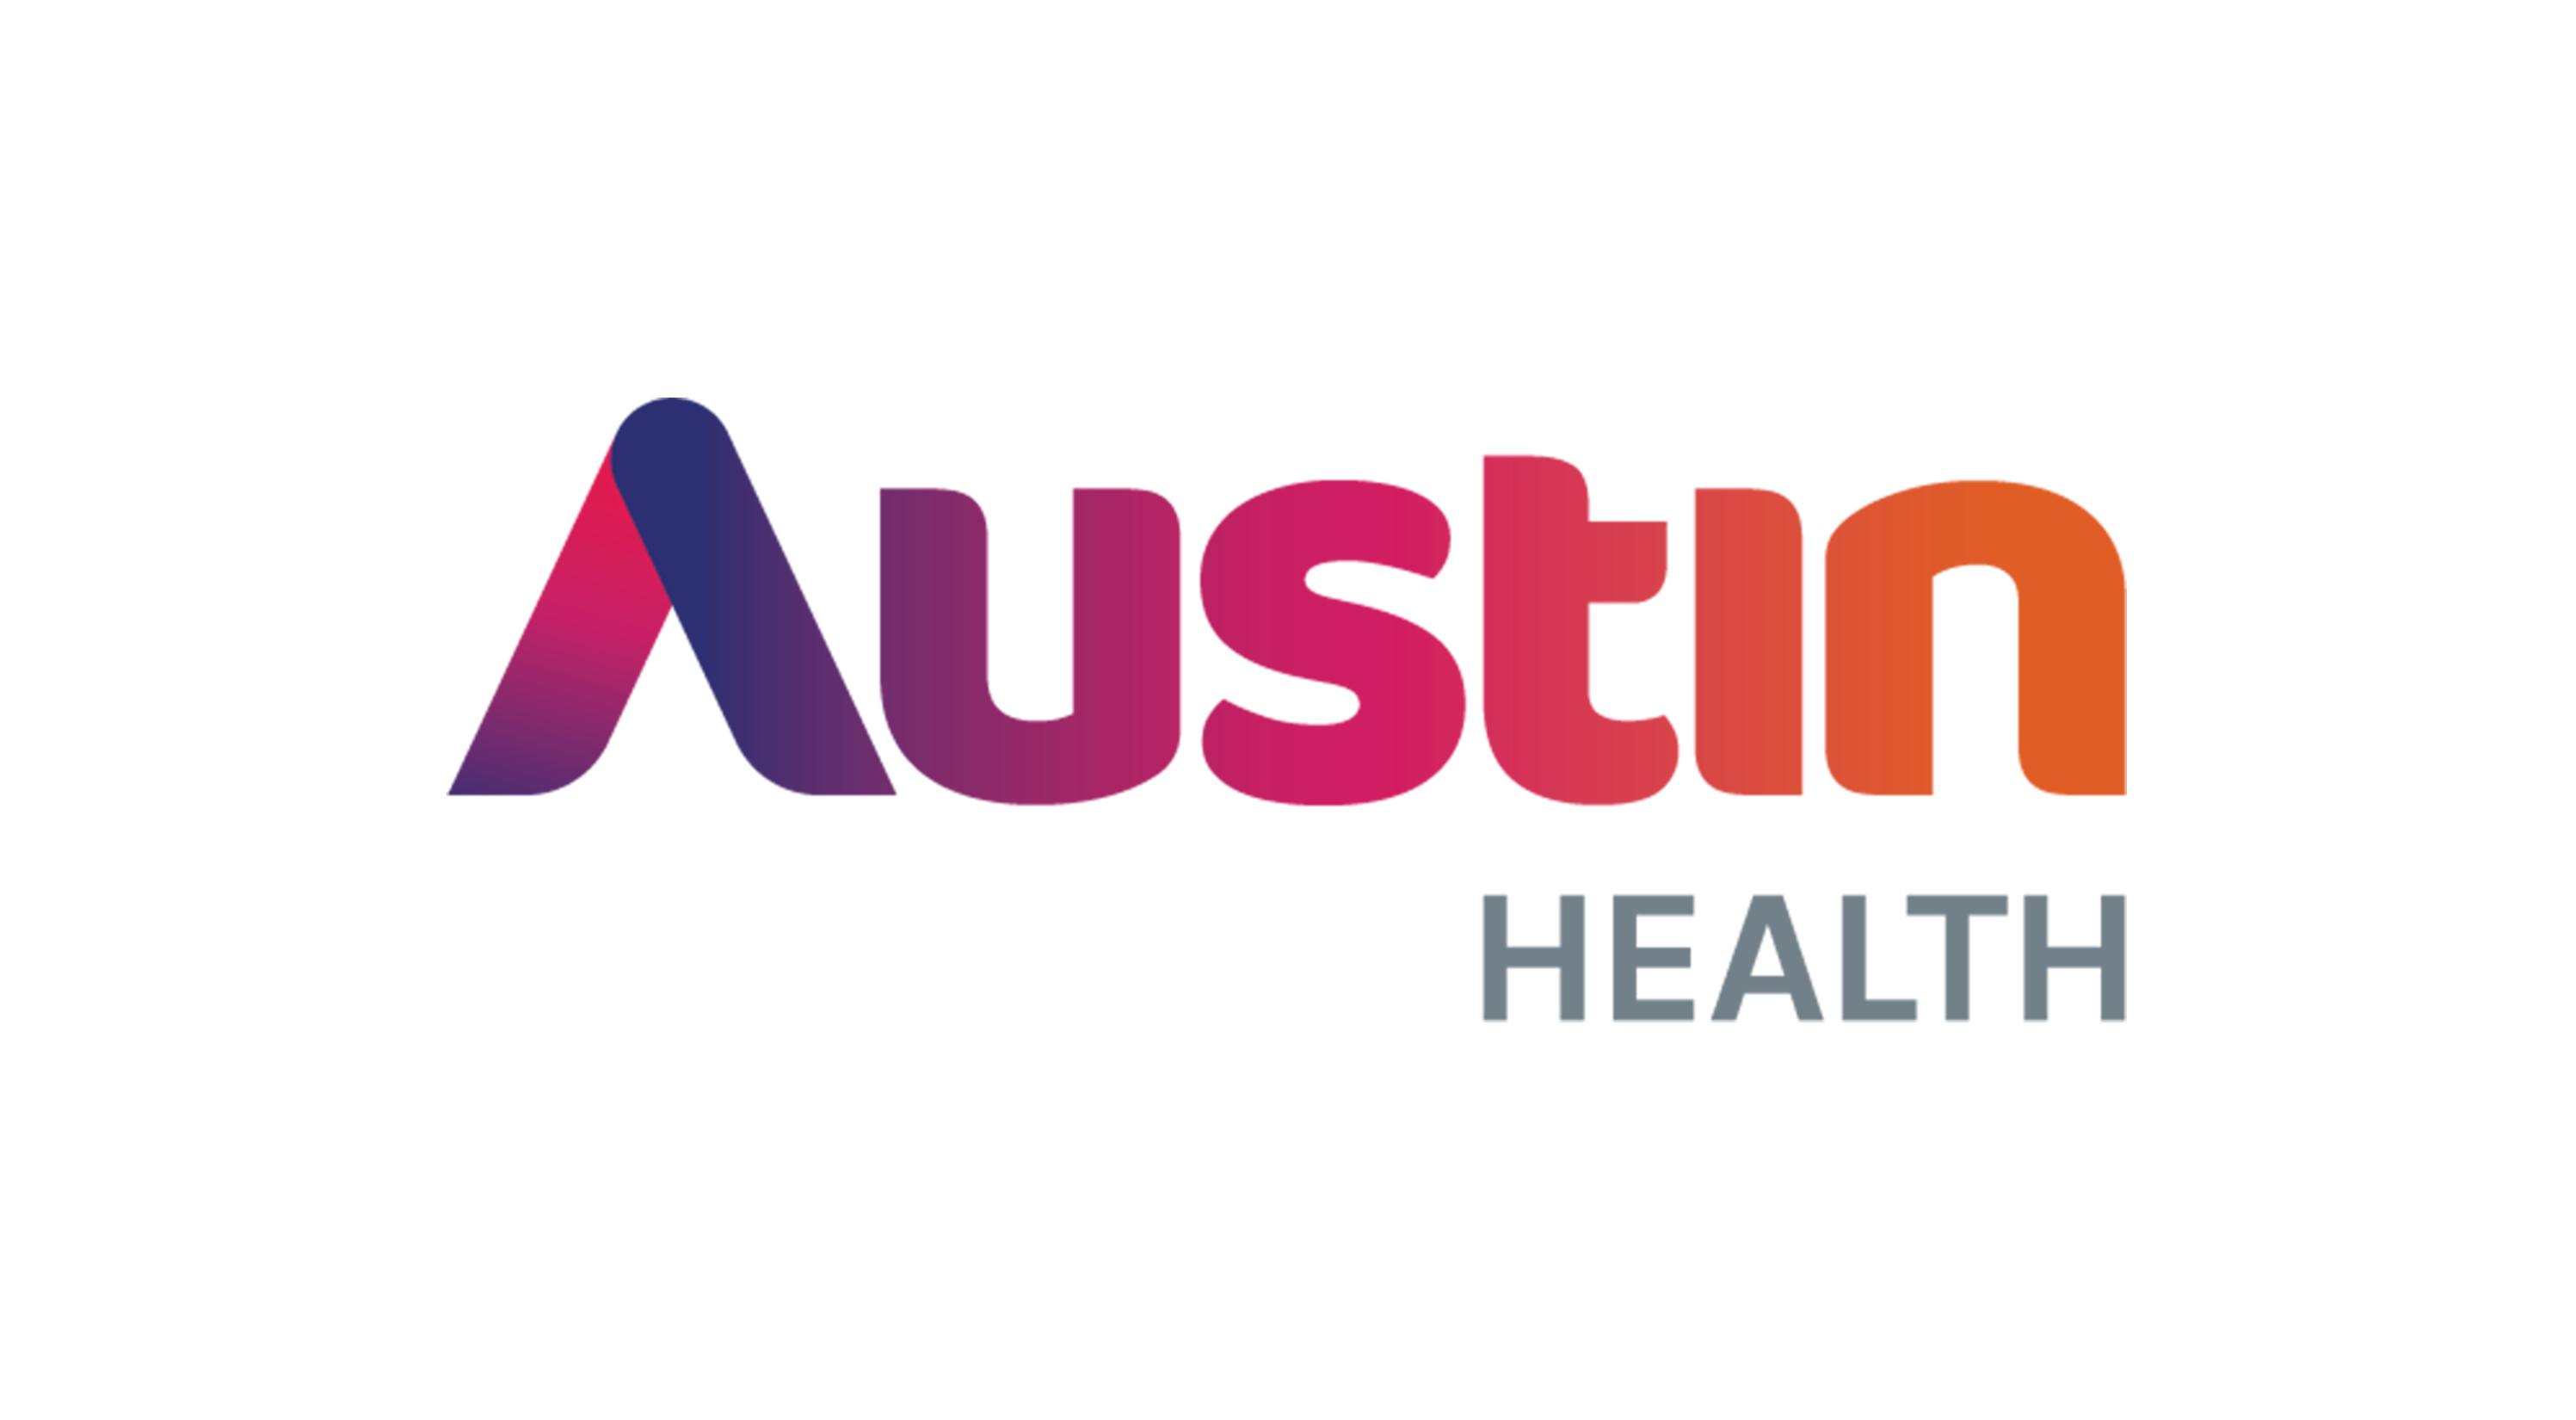 Austin Health